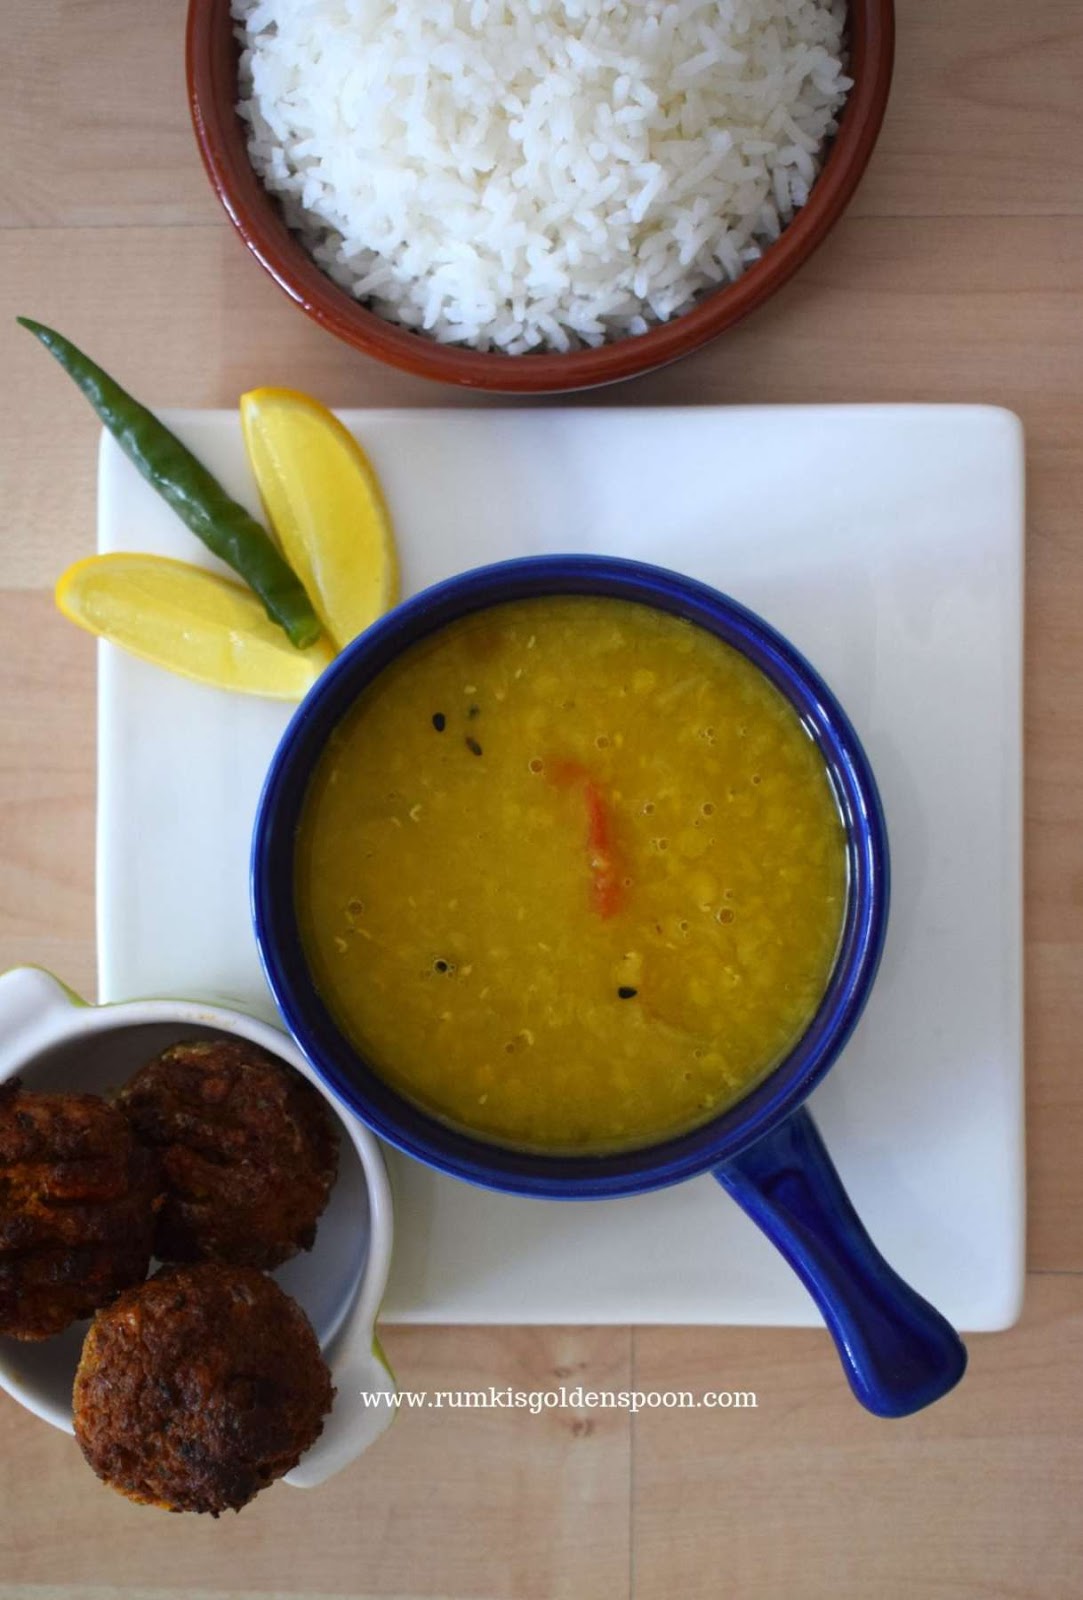 musur dal, masoor dal, masoor dal recipe, Bengali style masoor dal, recipe with red lentils, red lentils soup, red lentils recipe, Indian recipes, Vegetarian recipes, Vegan recipes, Quick and Easy recipes, Lentils recipes, Rumki's Golden Spoon